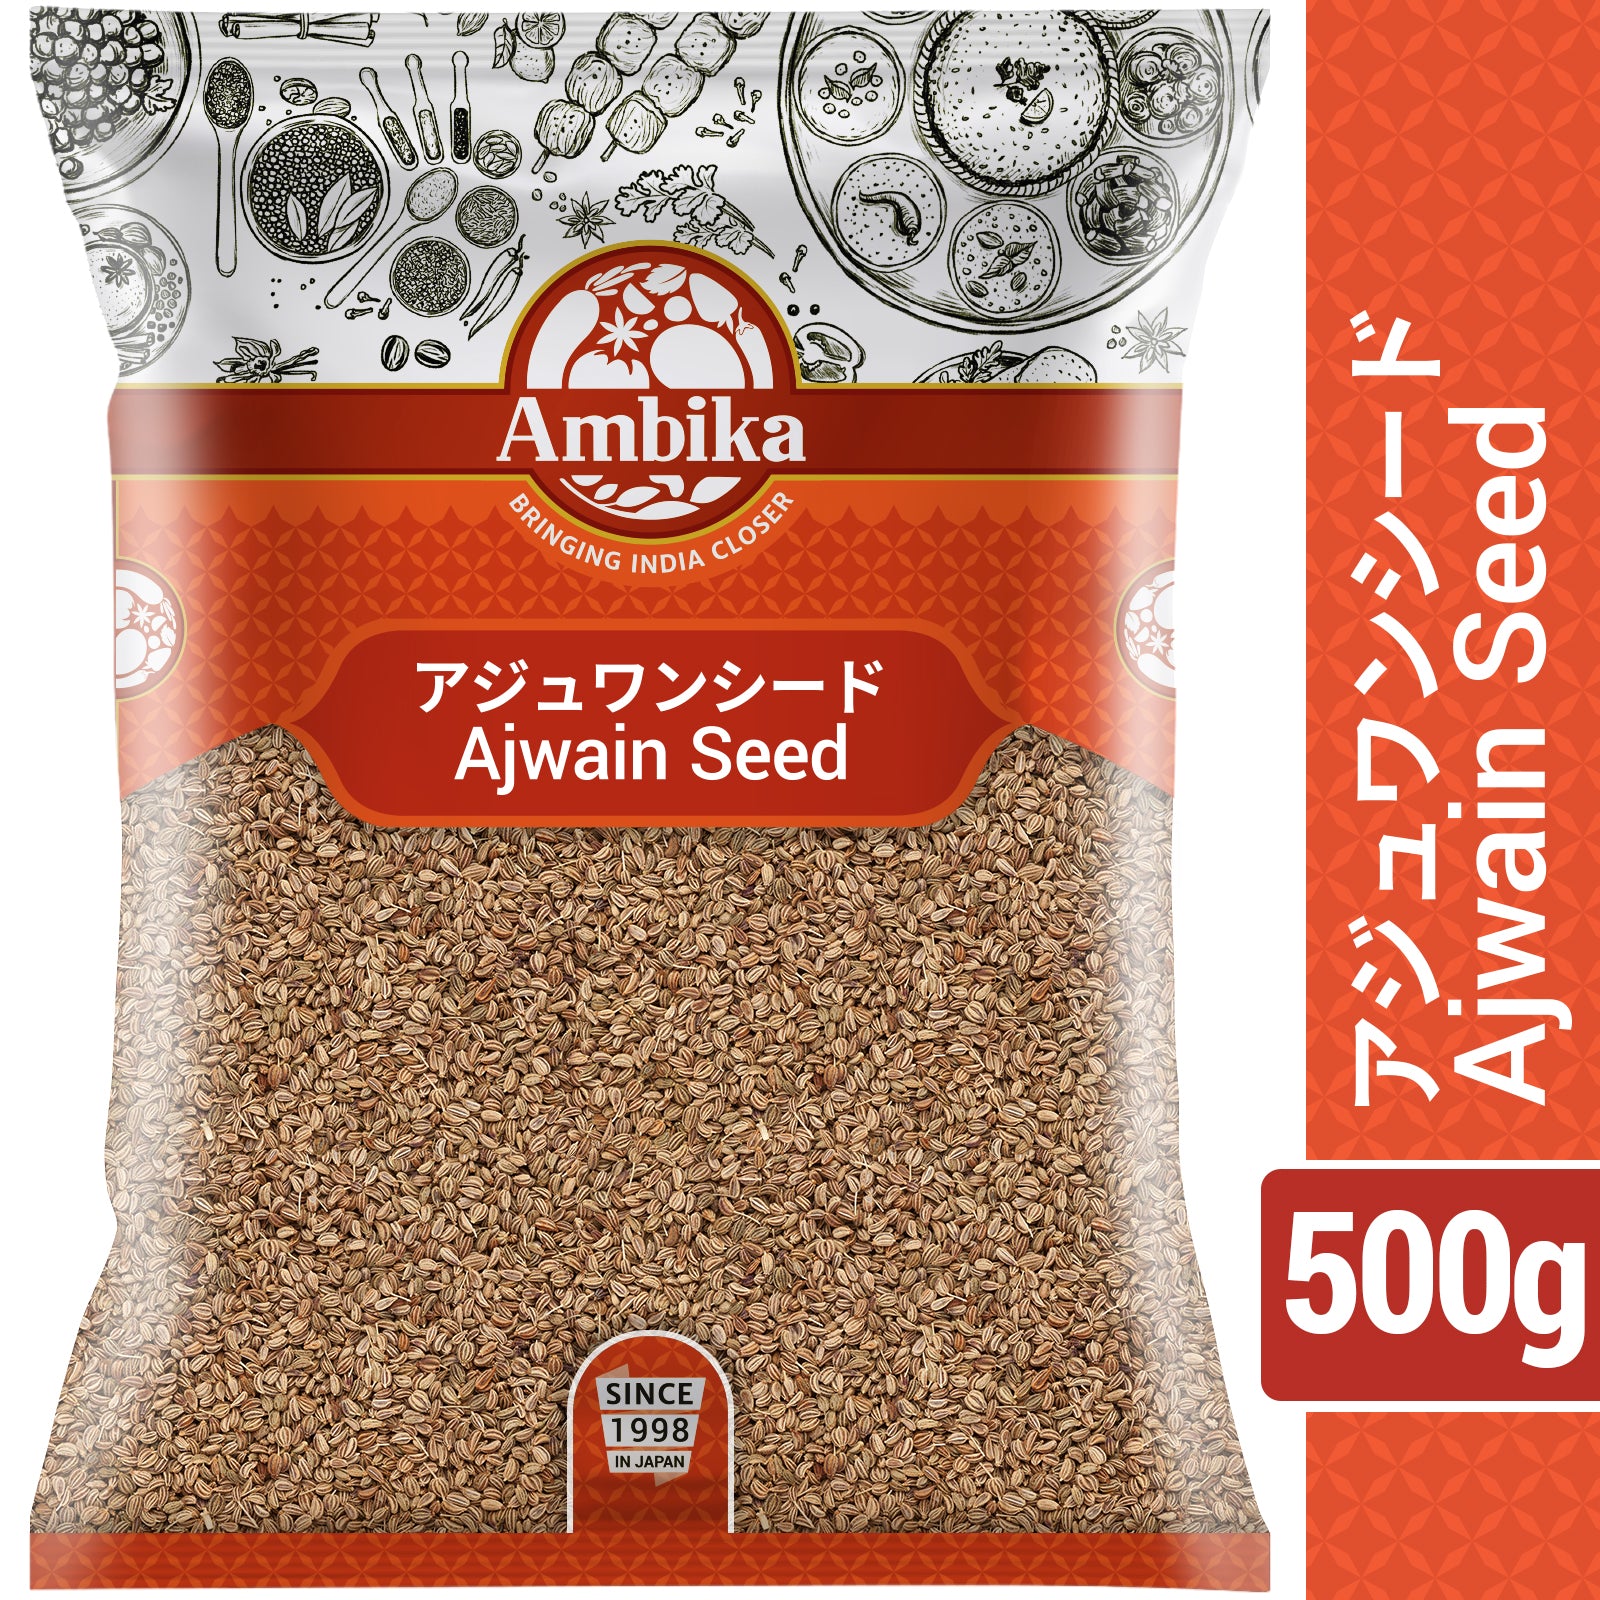 Ambika Ajwain Seed 500g